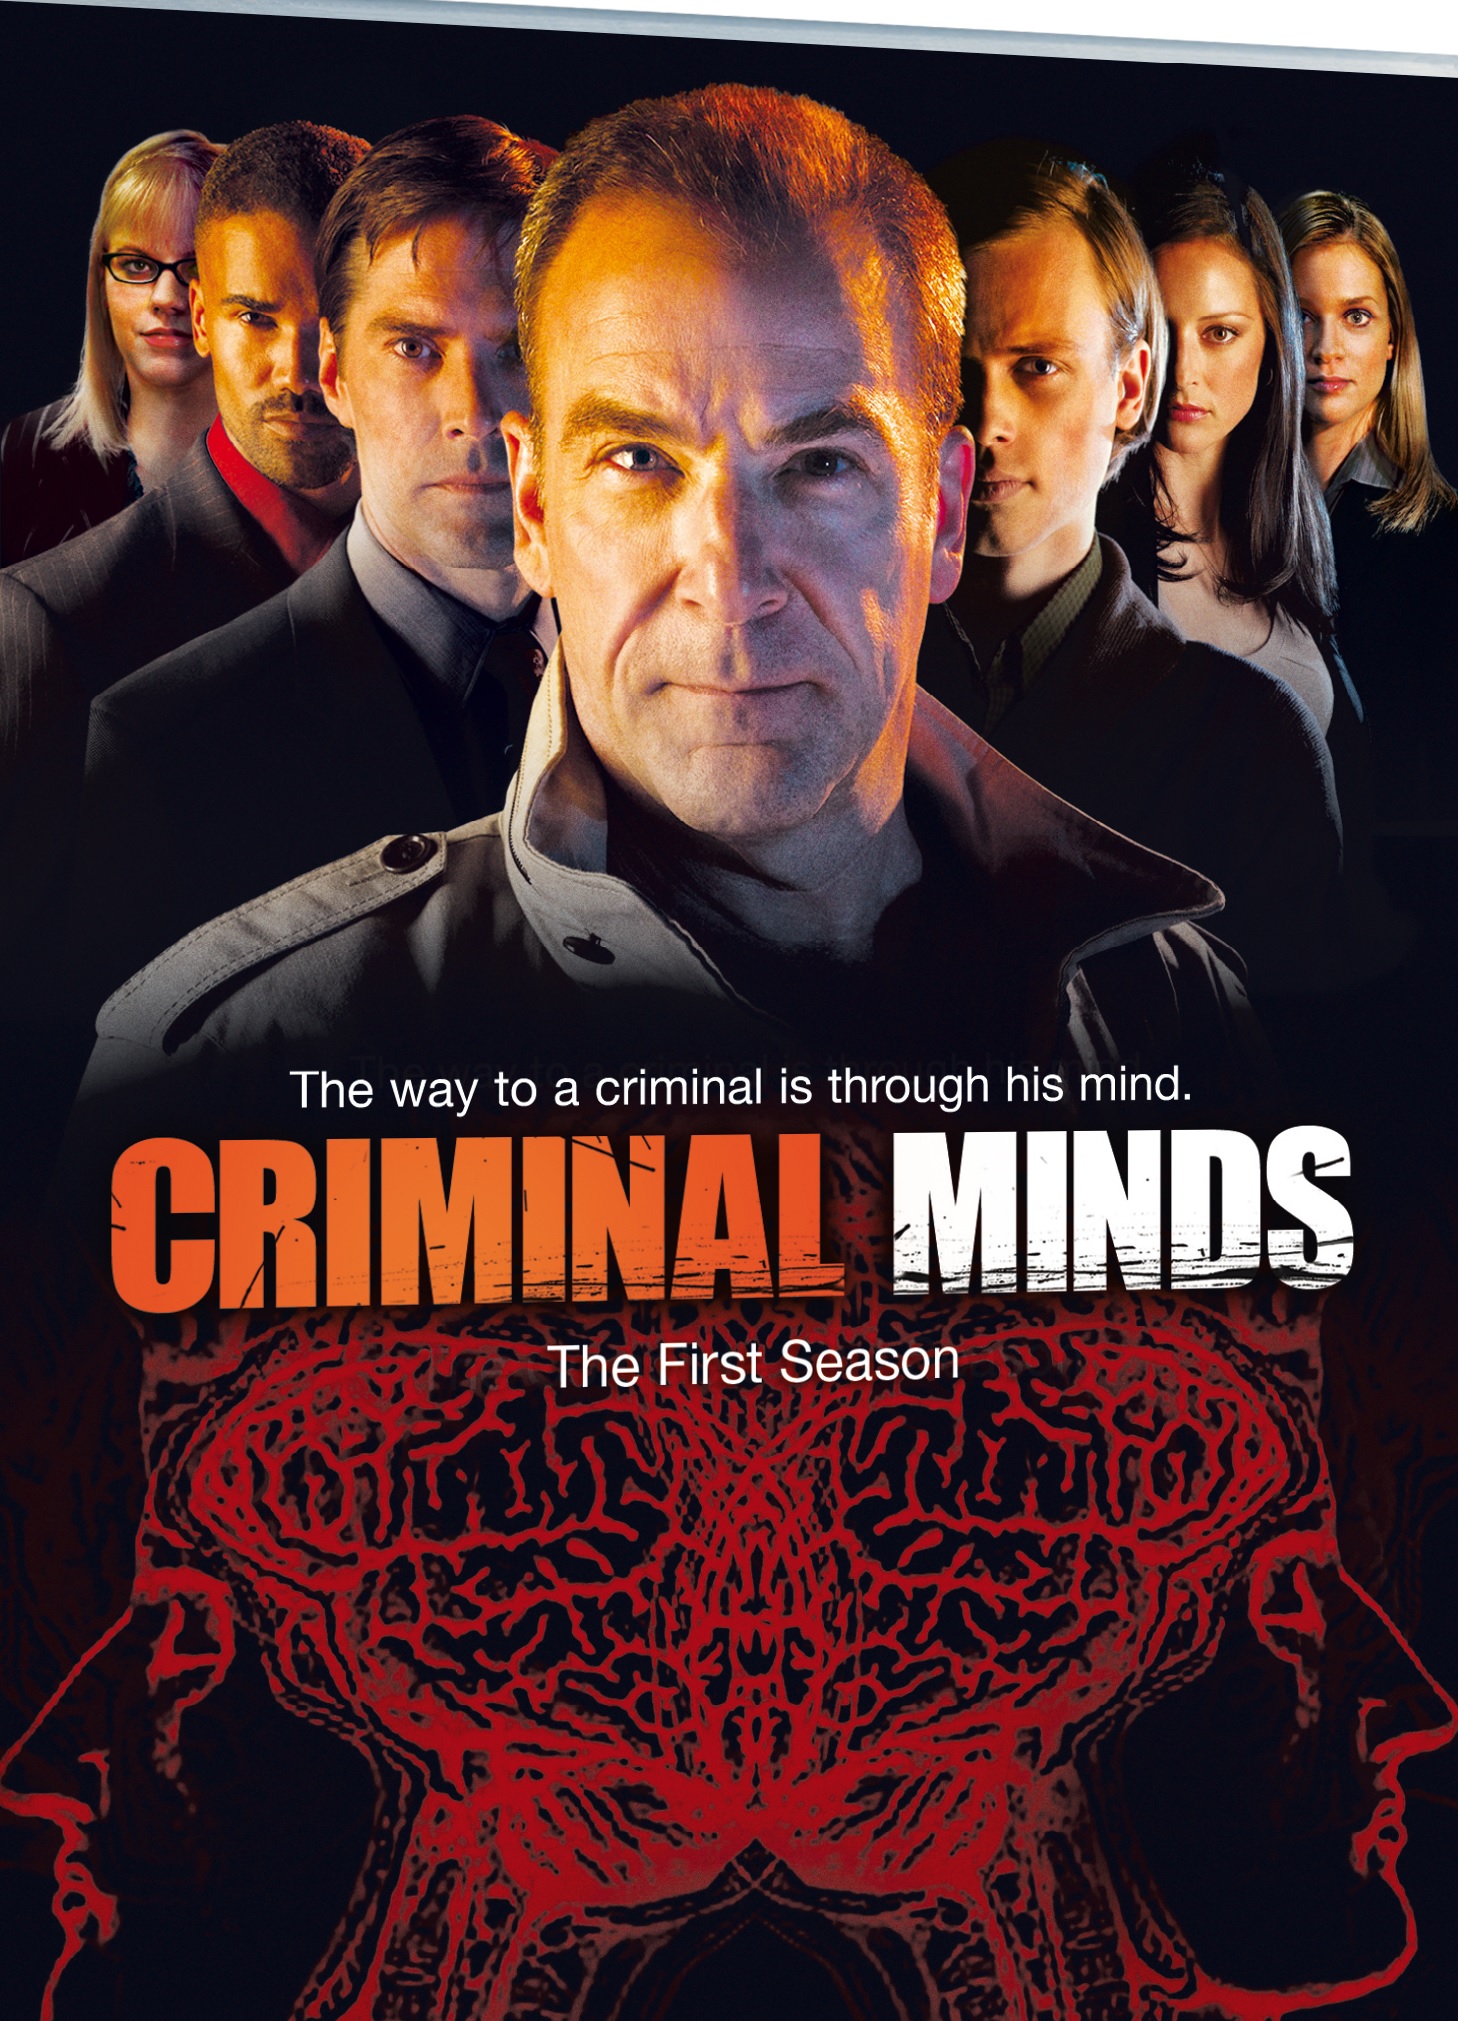 Criminal Minds Season 1 ทีมแกร่งเด็ดขั้วอาชญากรรม [พากษ์ไทย]